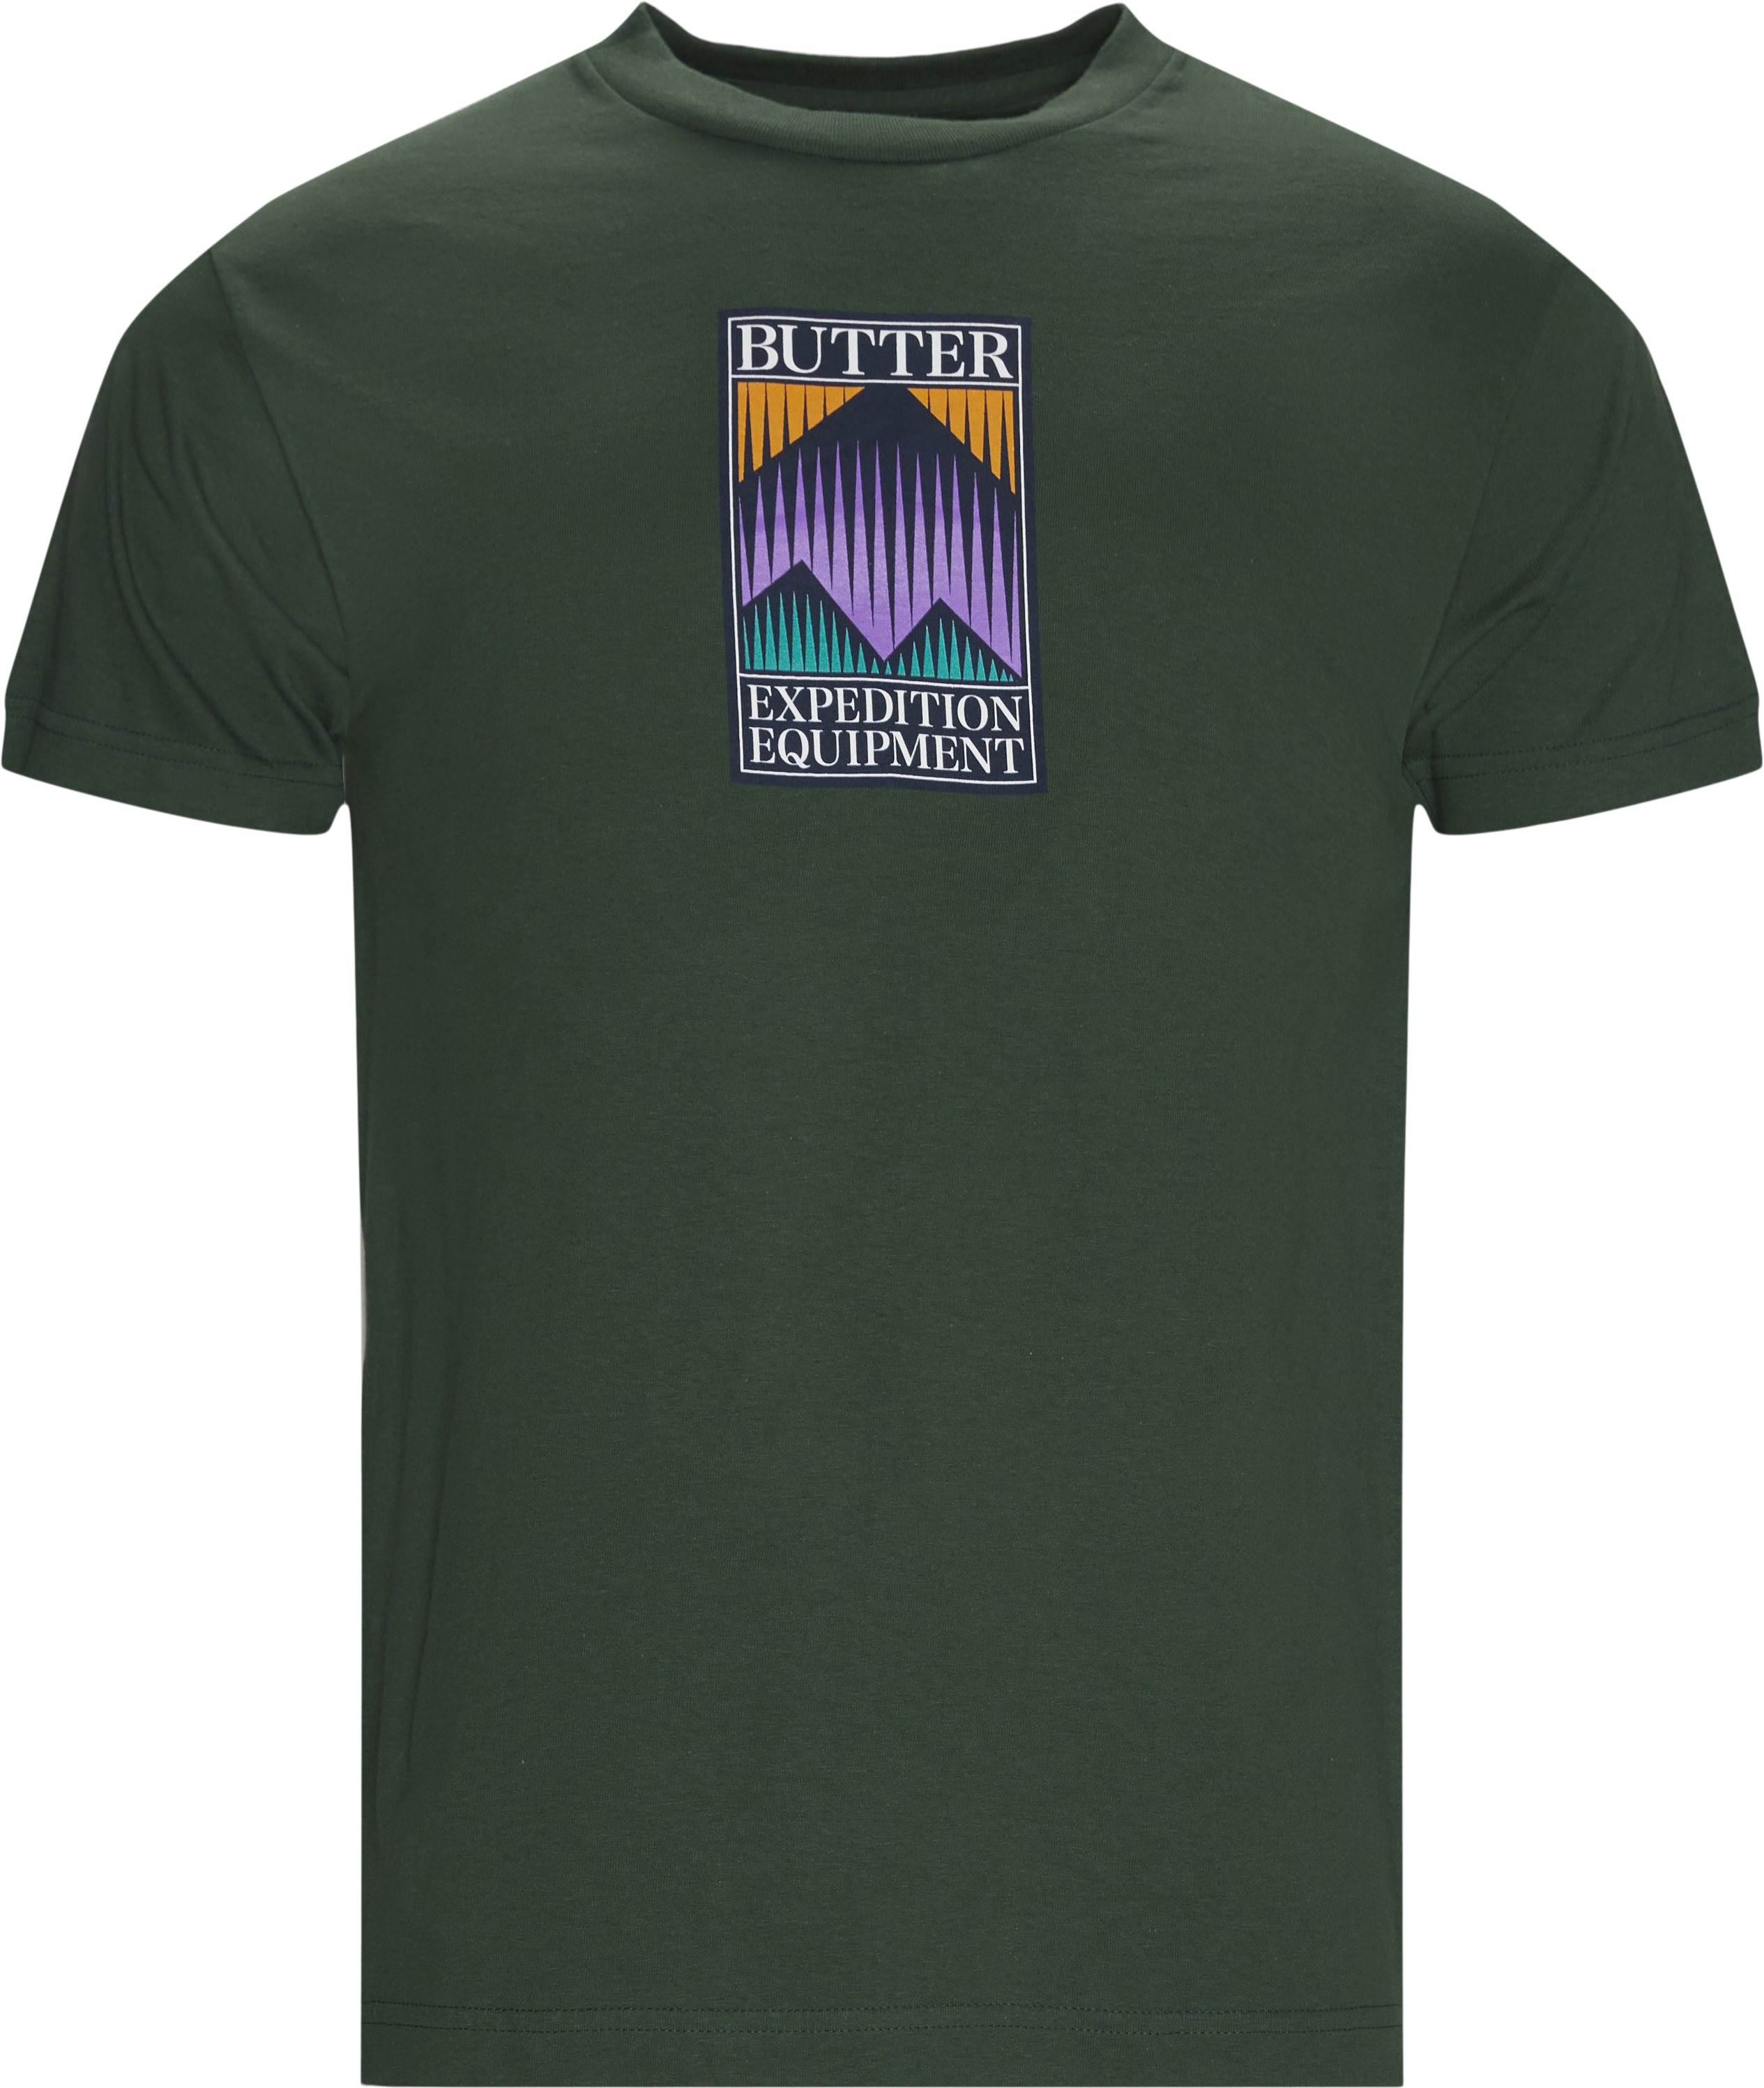 Expedition Tee - T-shirts - Regular fit - Grön